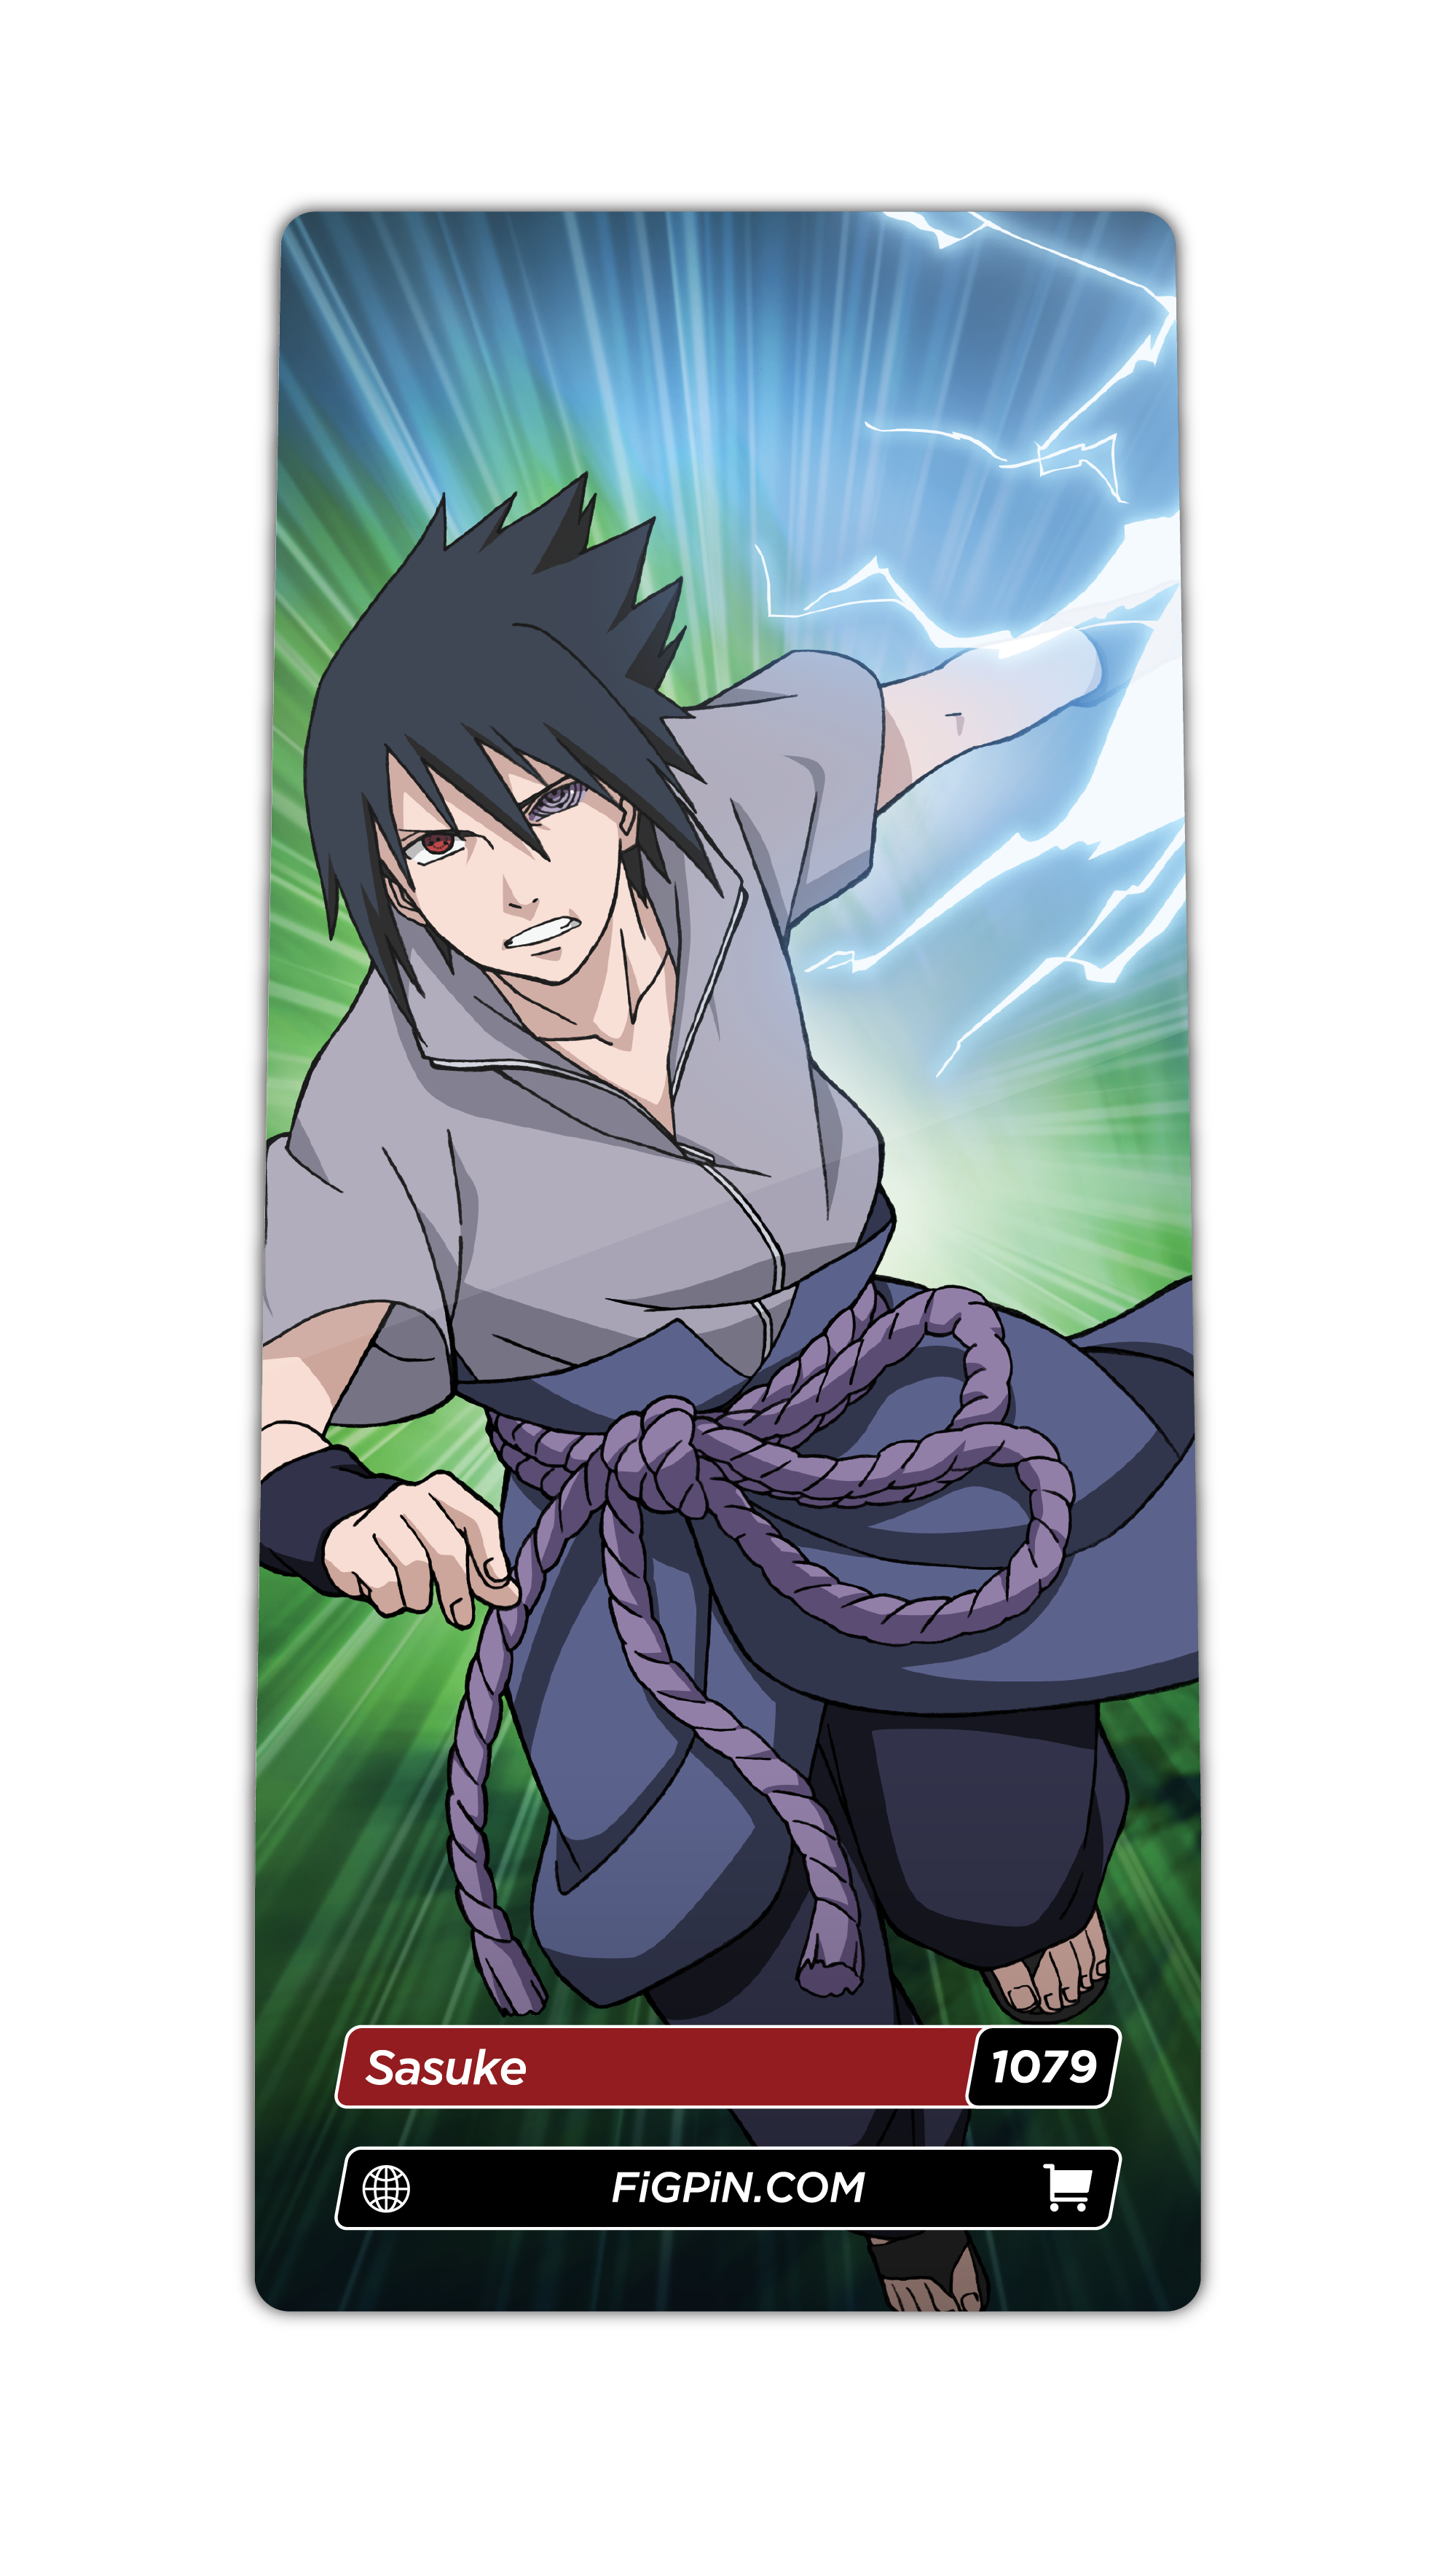 Sasuke (1079)